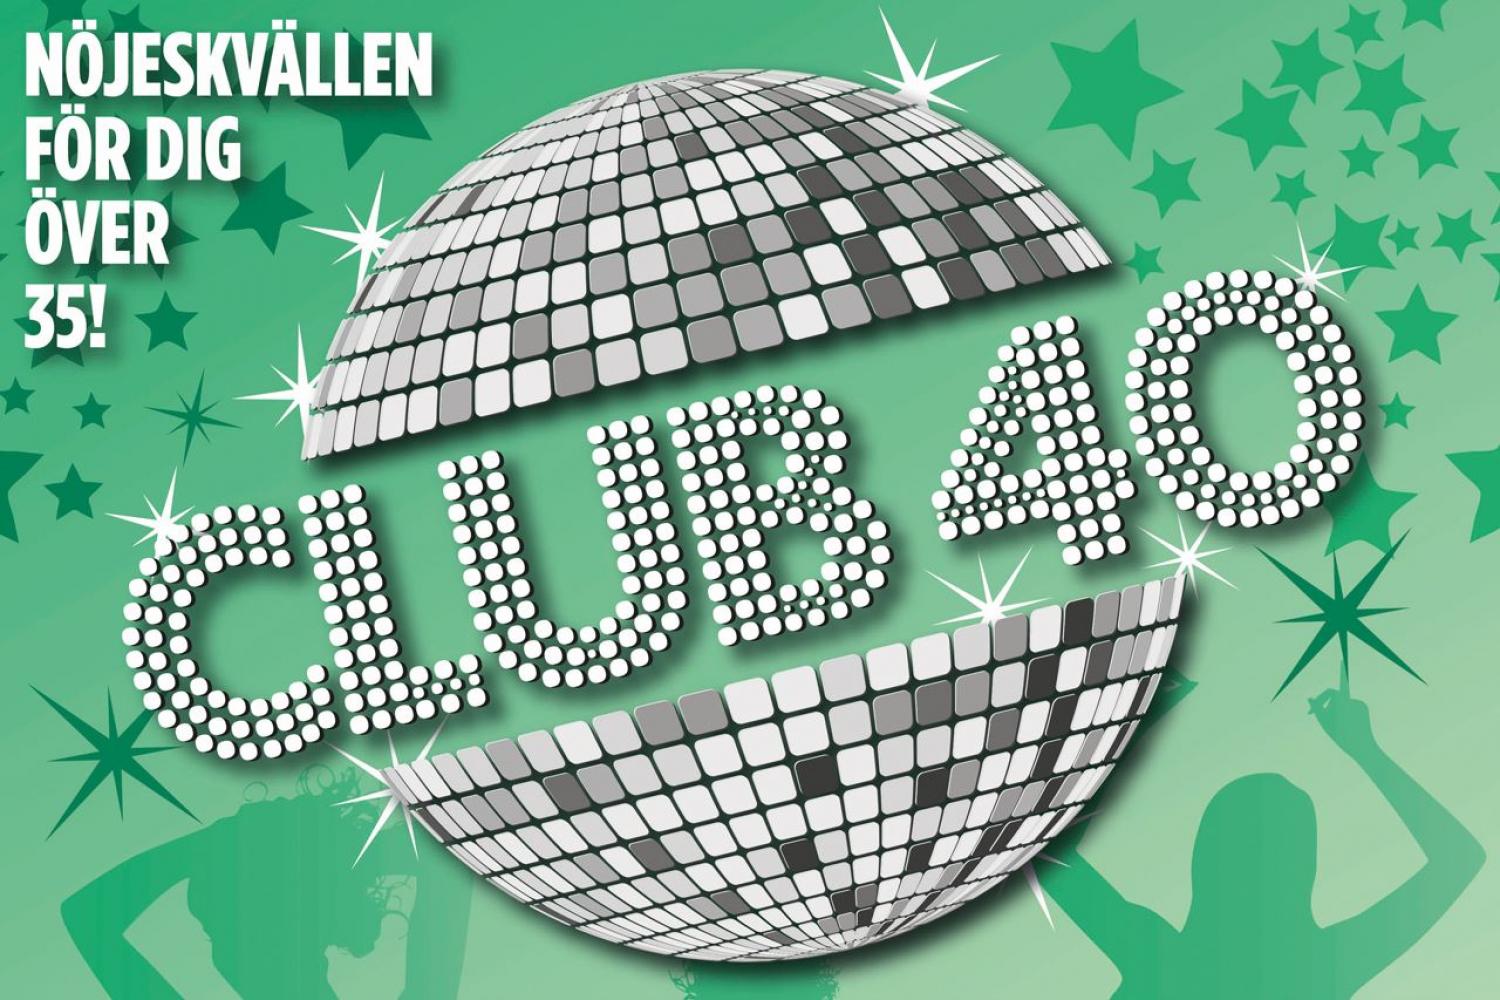 Club 40